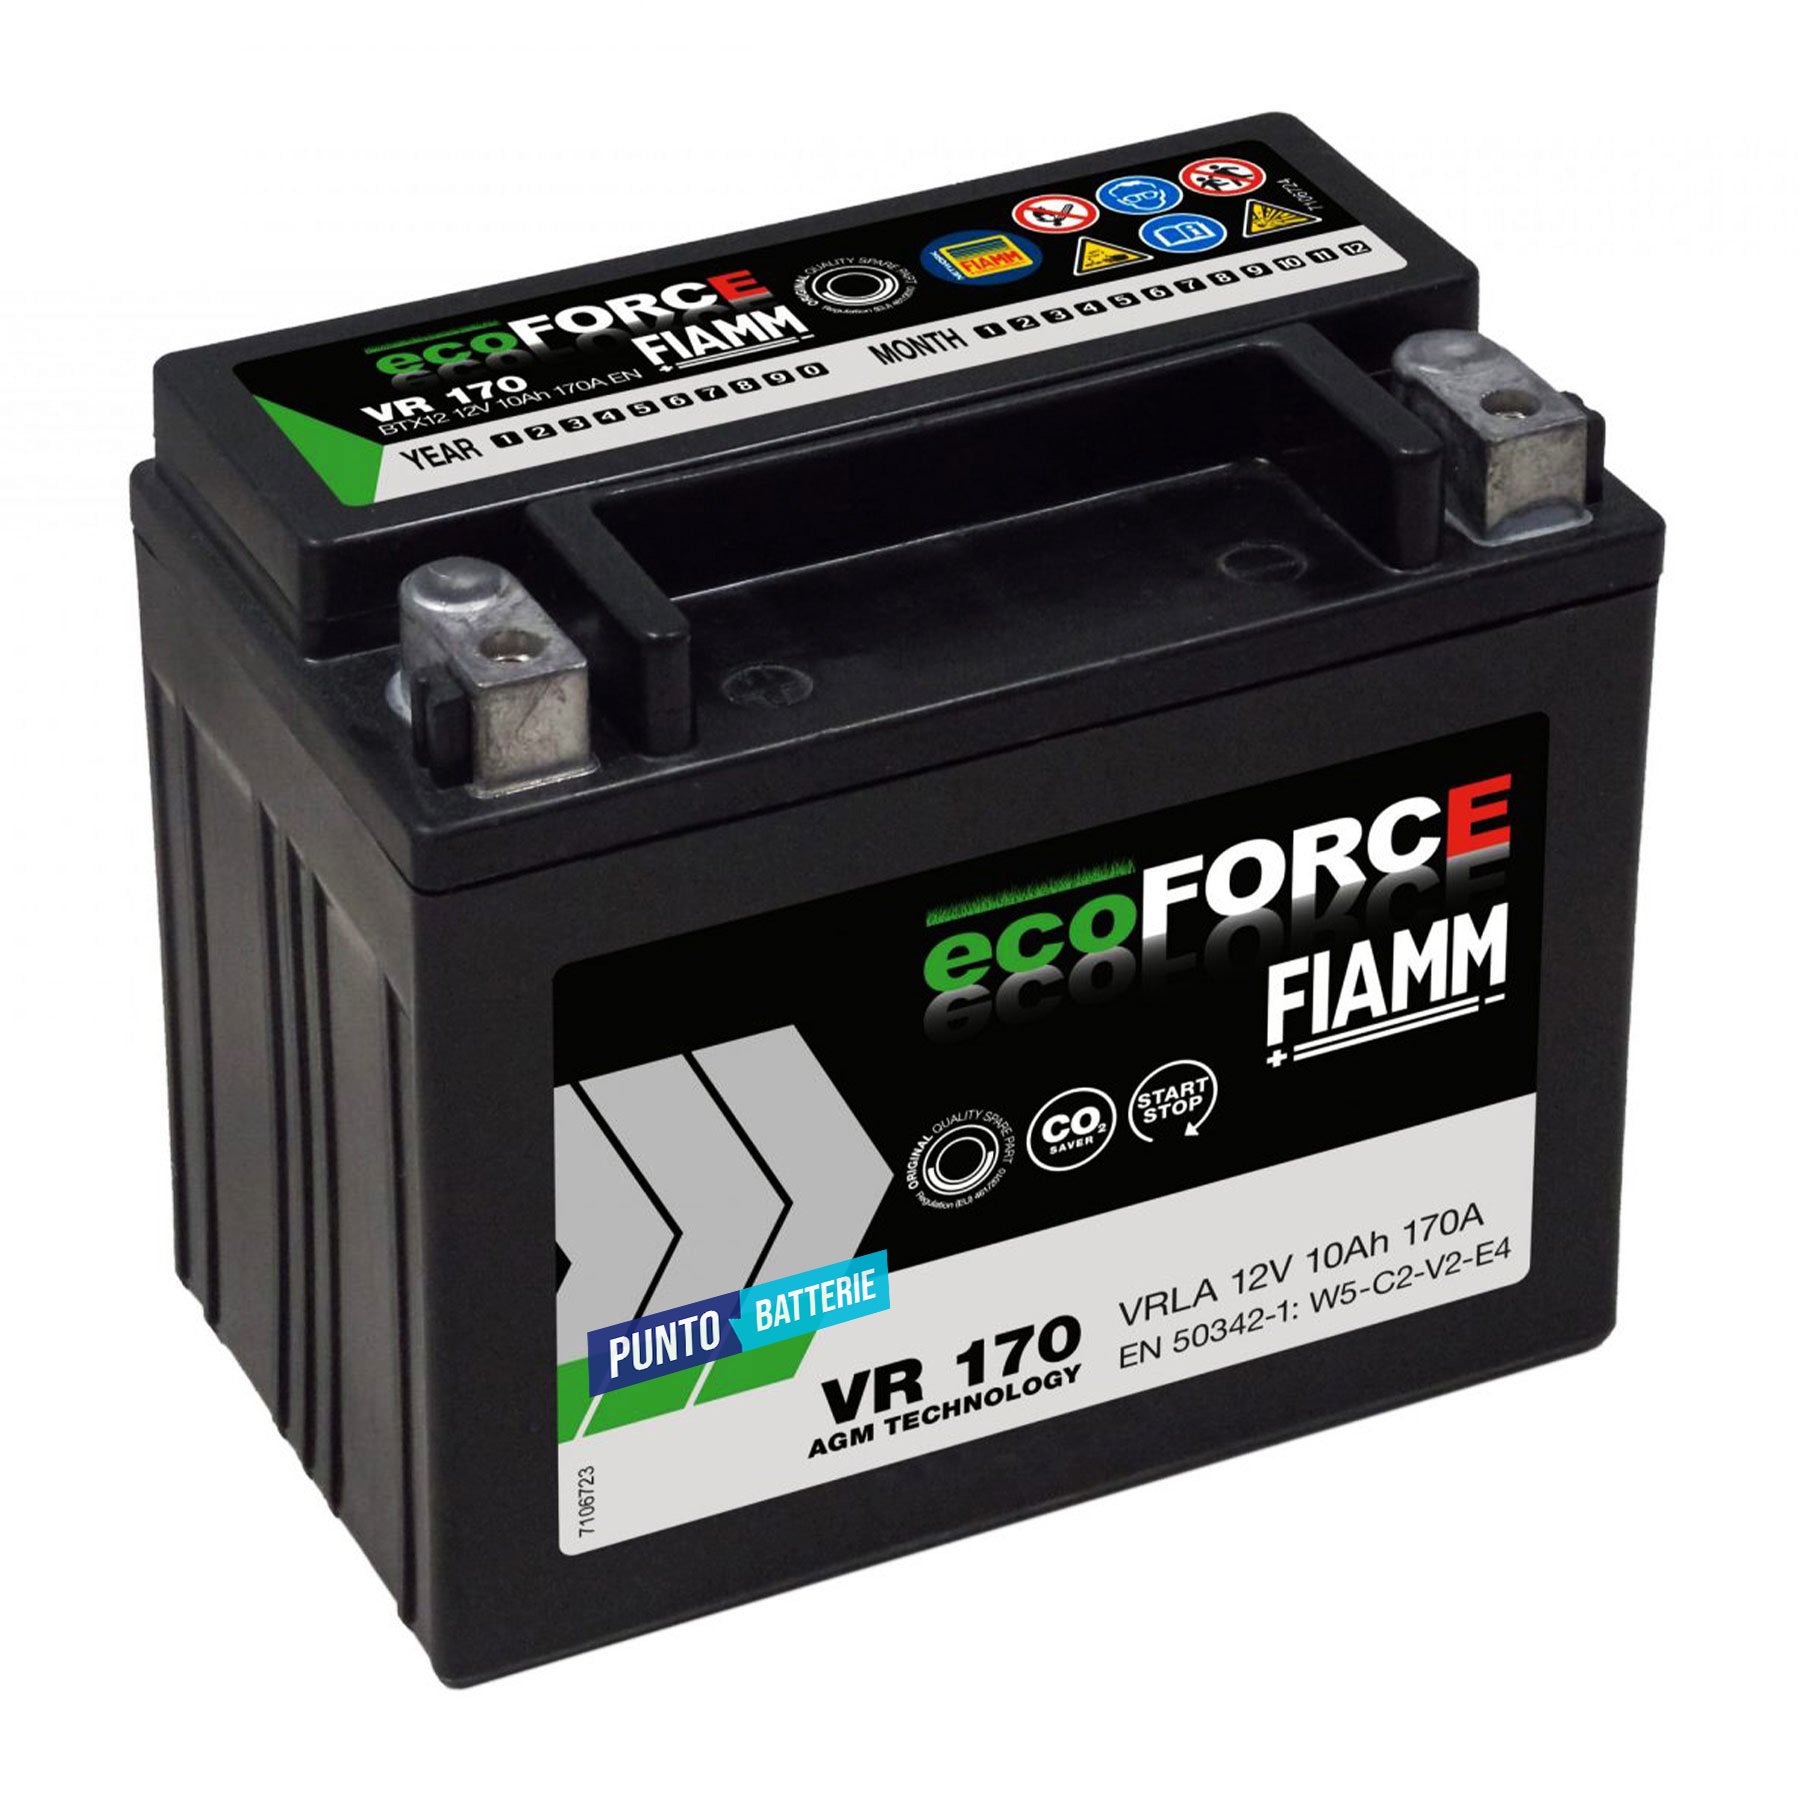 Batteria Tudor TG2154 - Start PRO (12V, 215Ah, 1200A) - Puntobatterie